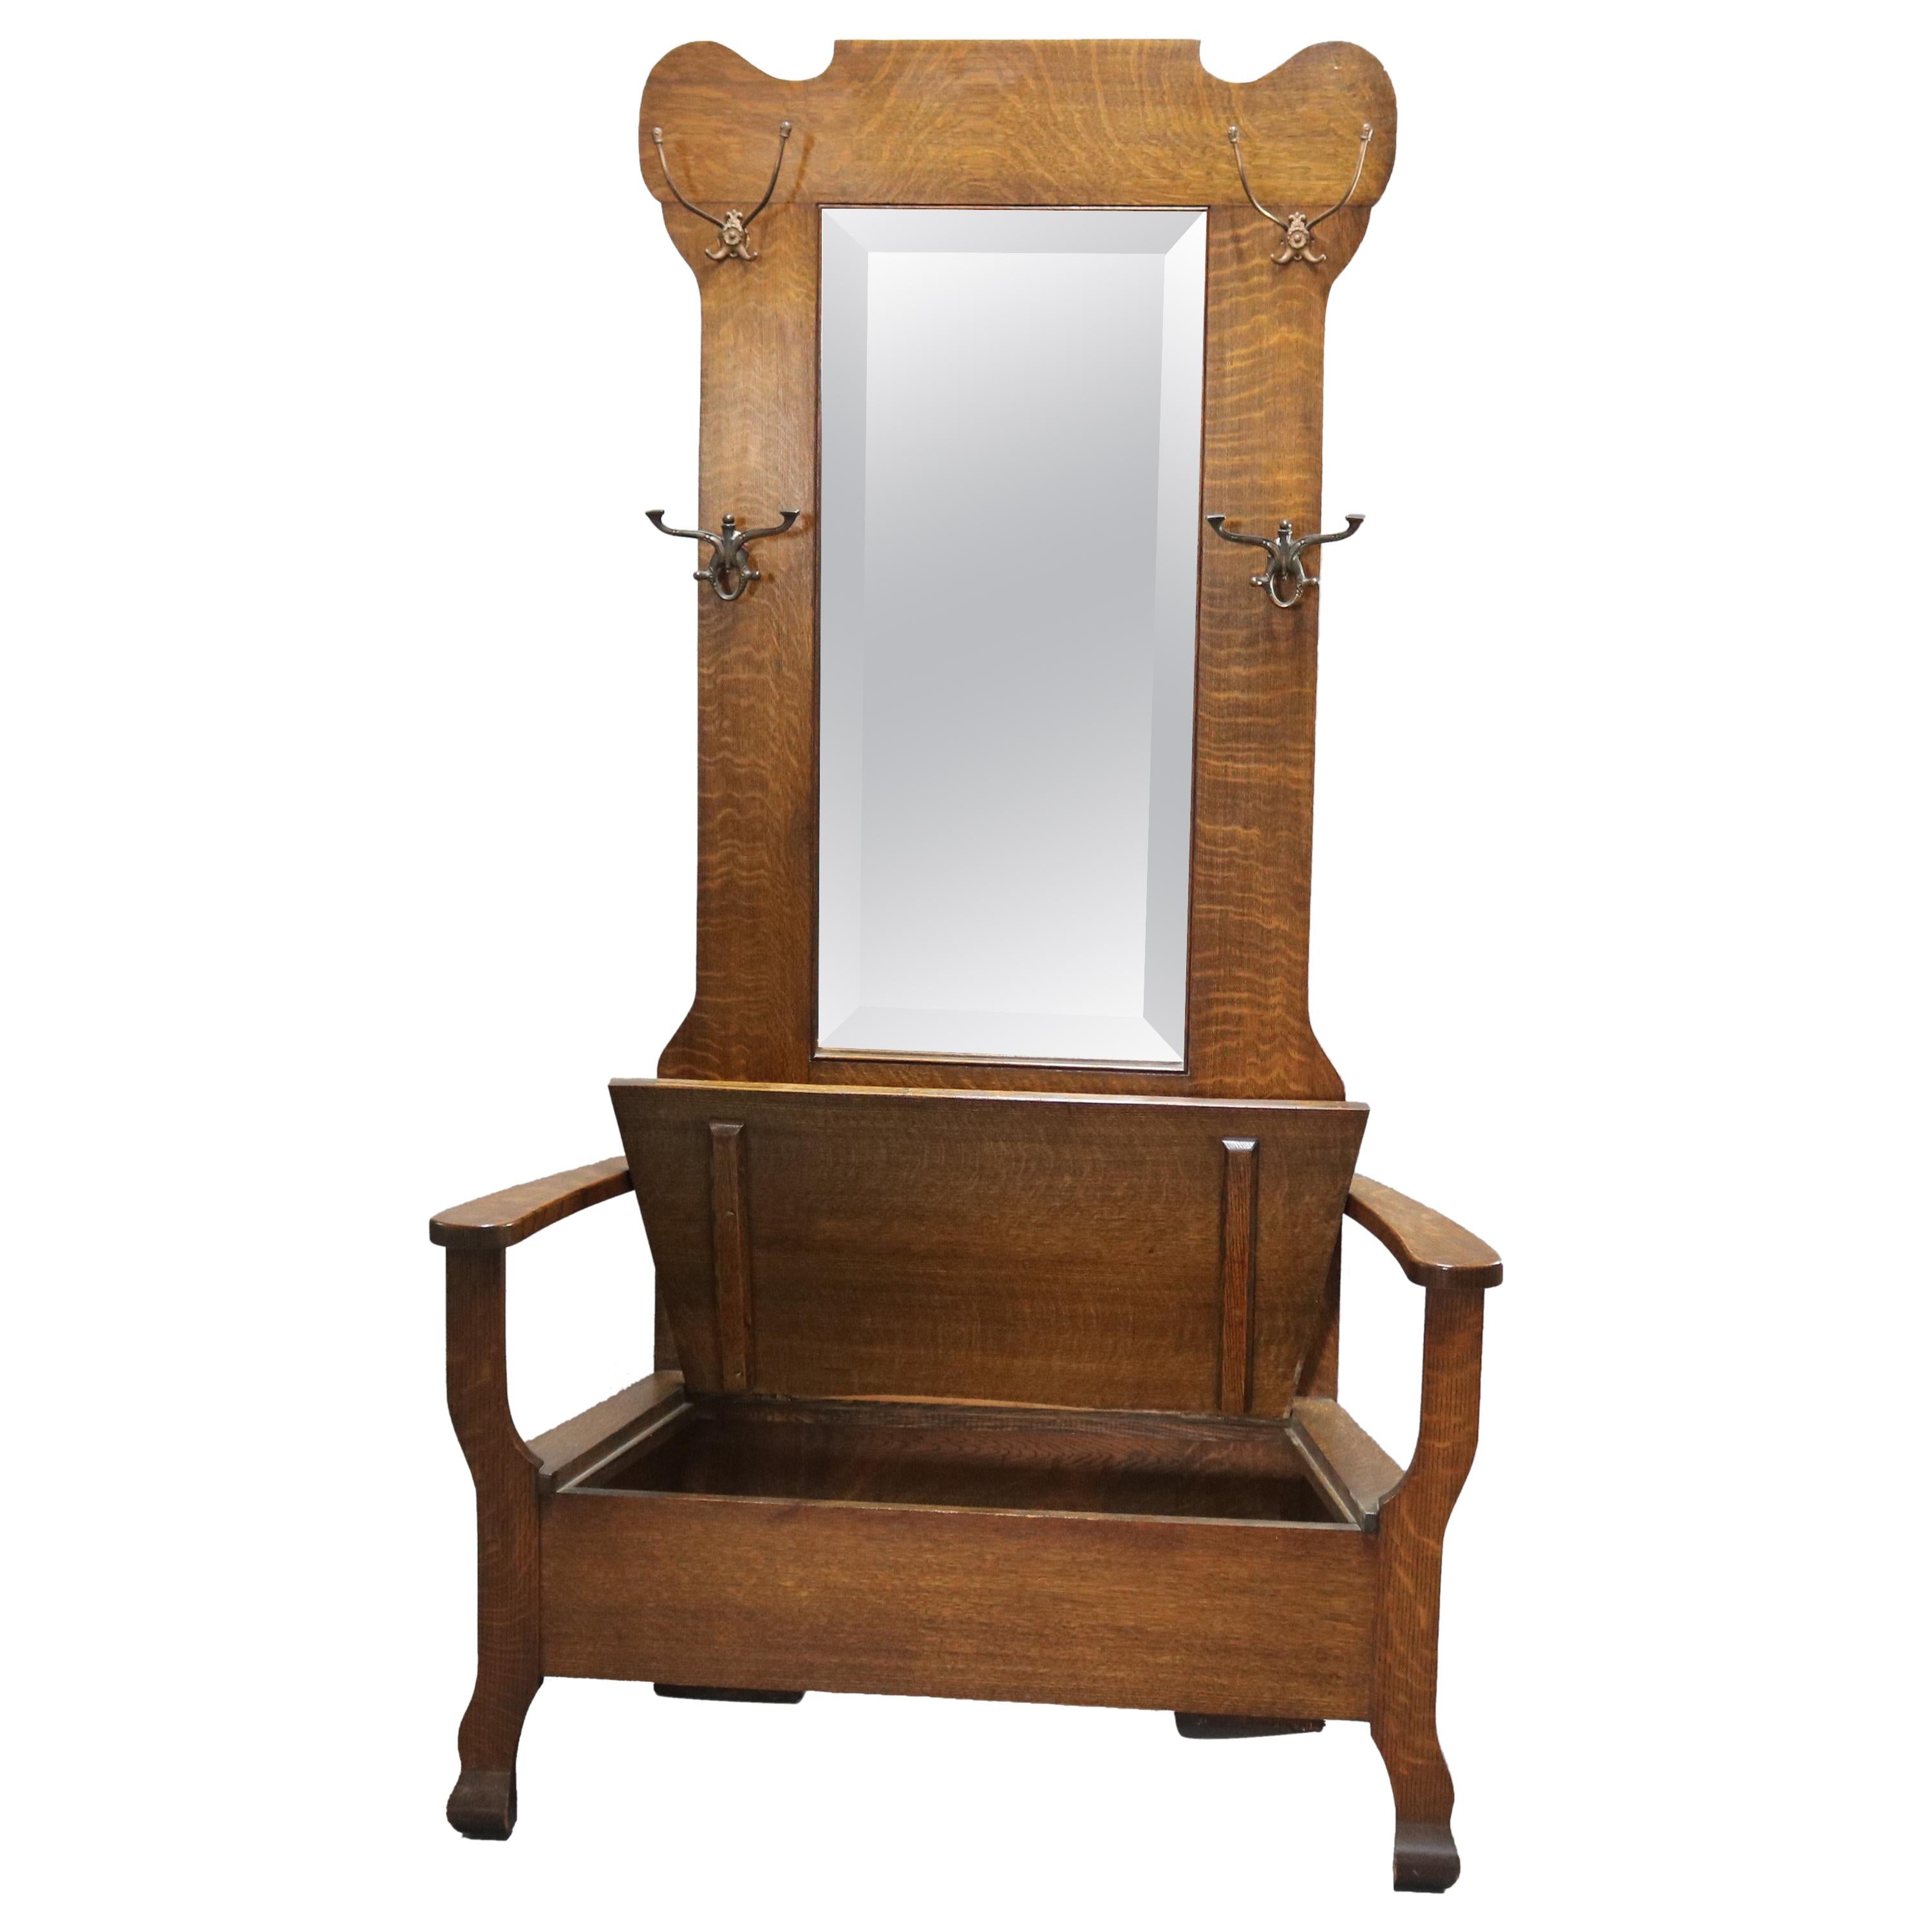 Antique Arts & Crafts Mission Oak Mirrored Lift Top Hall Seat, circa 1900